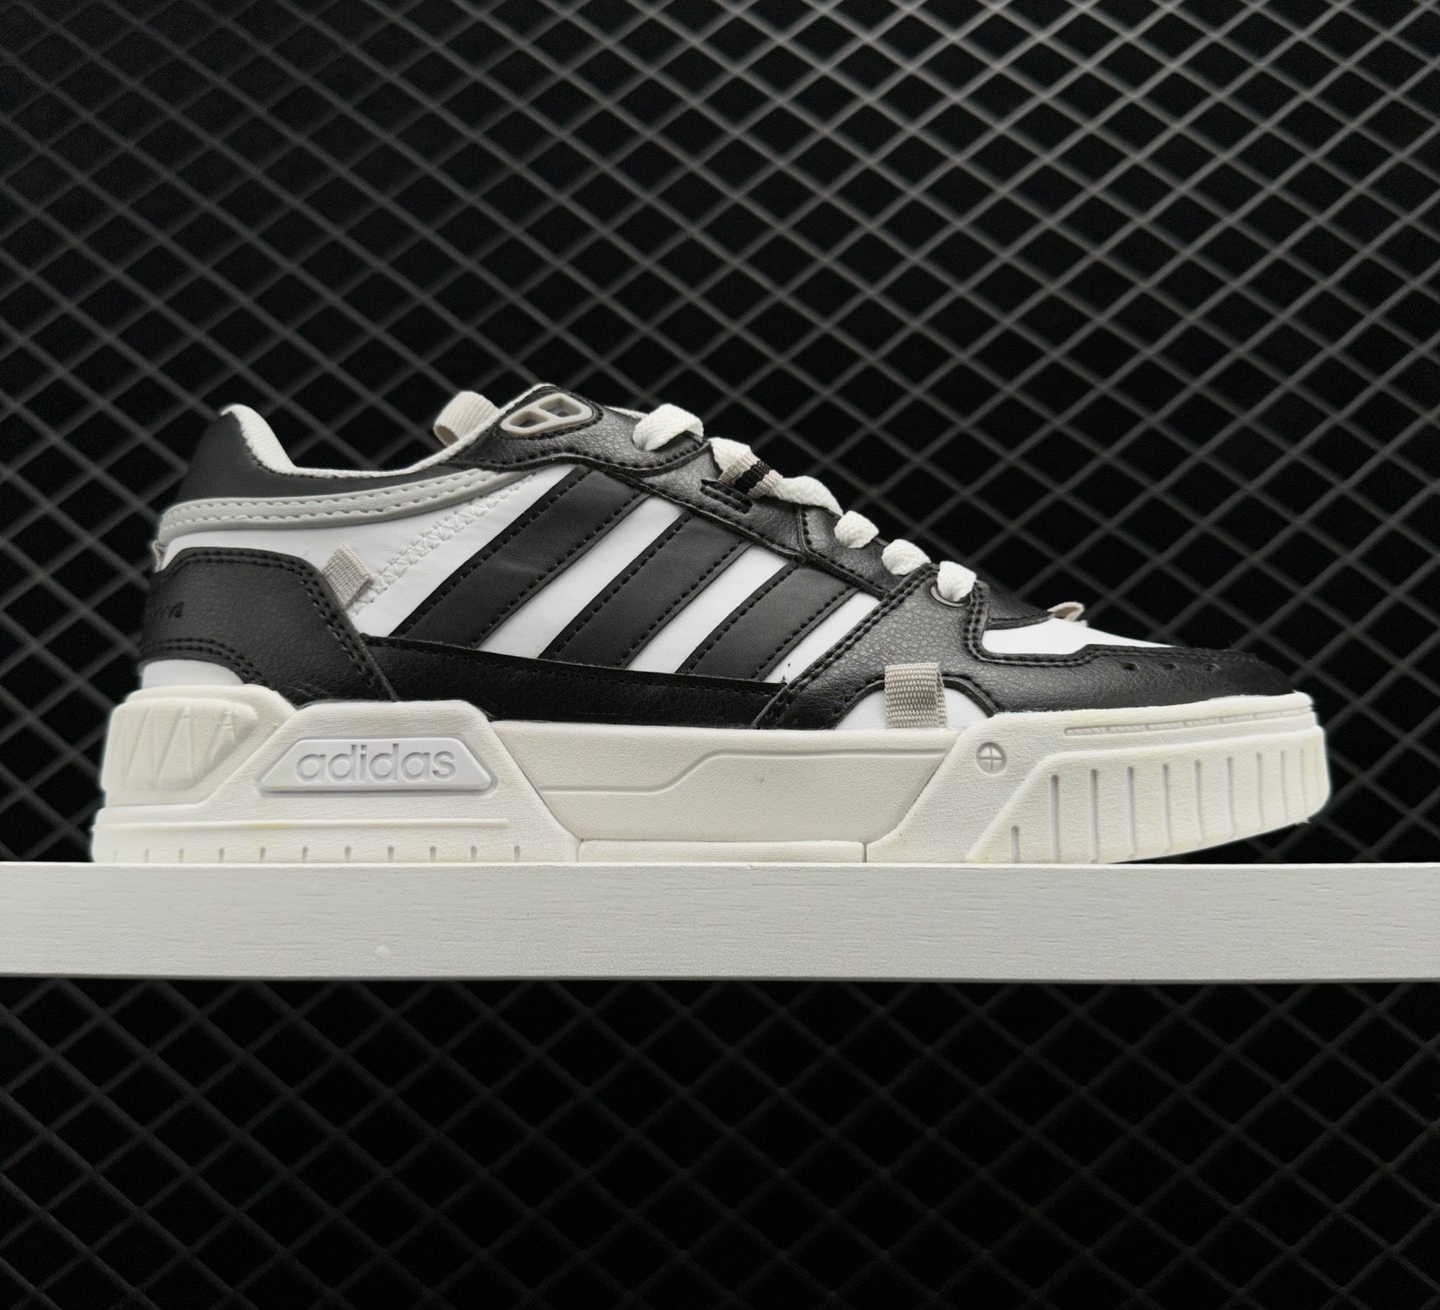 Adidas Neo D-Pad Black White IG7586: Sleek & Stylish Footwear